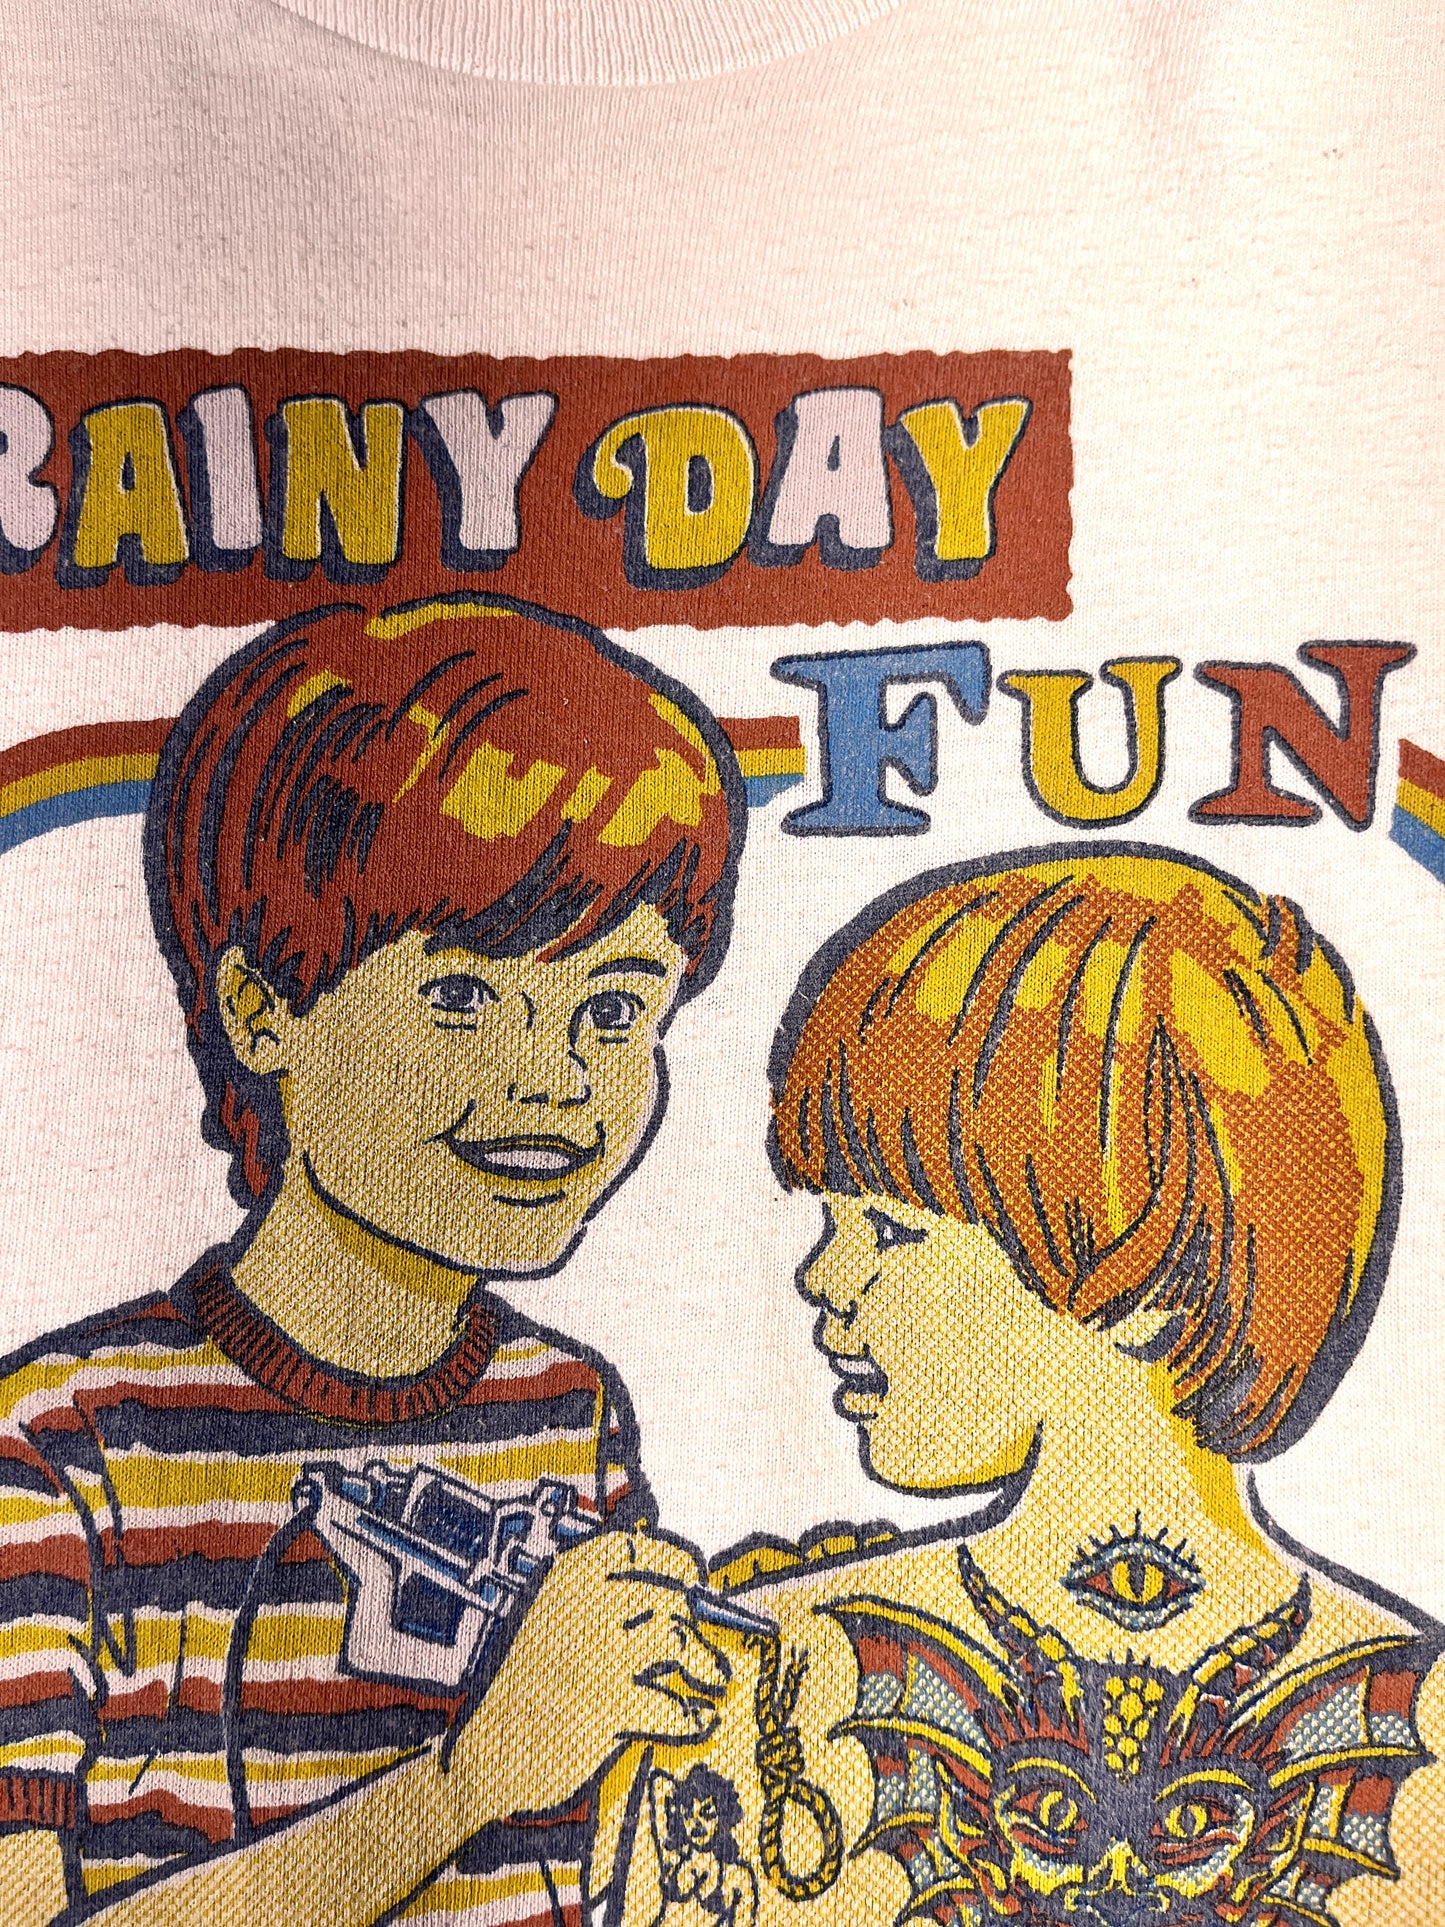 Vintage Tattoo T-Shirt Rainy Day Fun